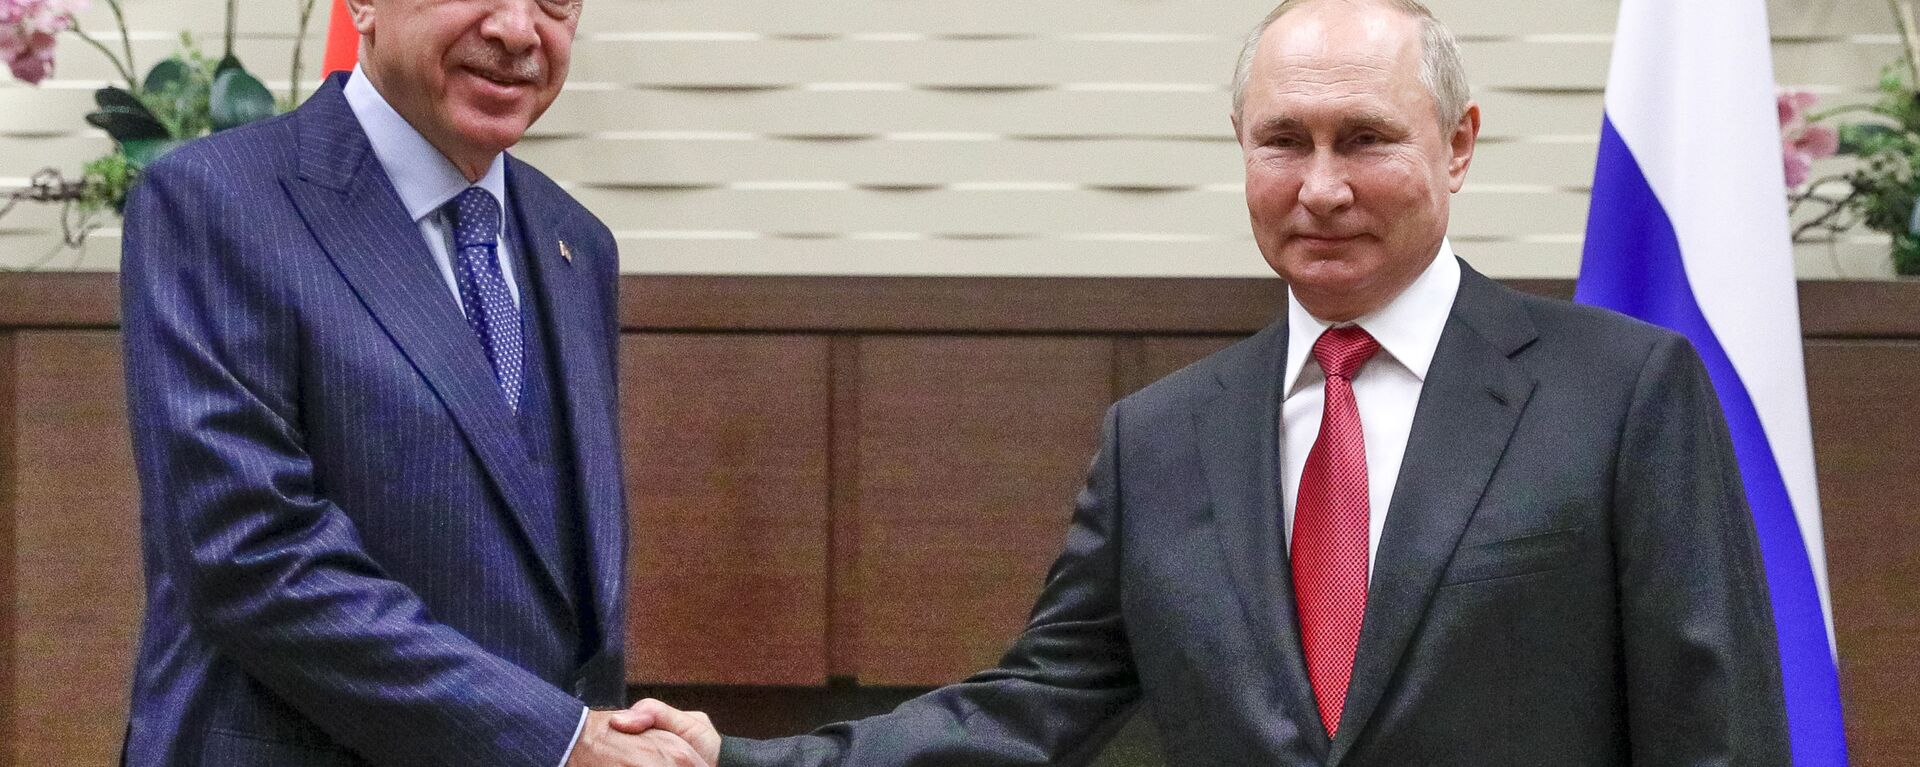 Presidente turco, Recep Tayyip Erdogan, e presidente russo, Vladimir Putin, durante o encontro em Sochi, Rússia, 29 de setembro de 2021 - Sputnik Brasil, 1920, 25.03.2022